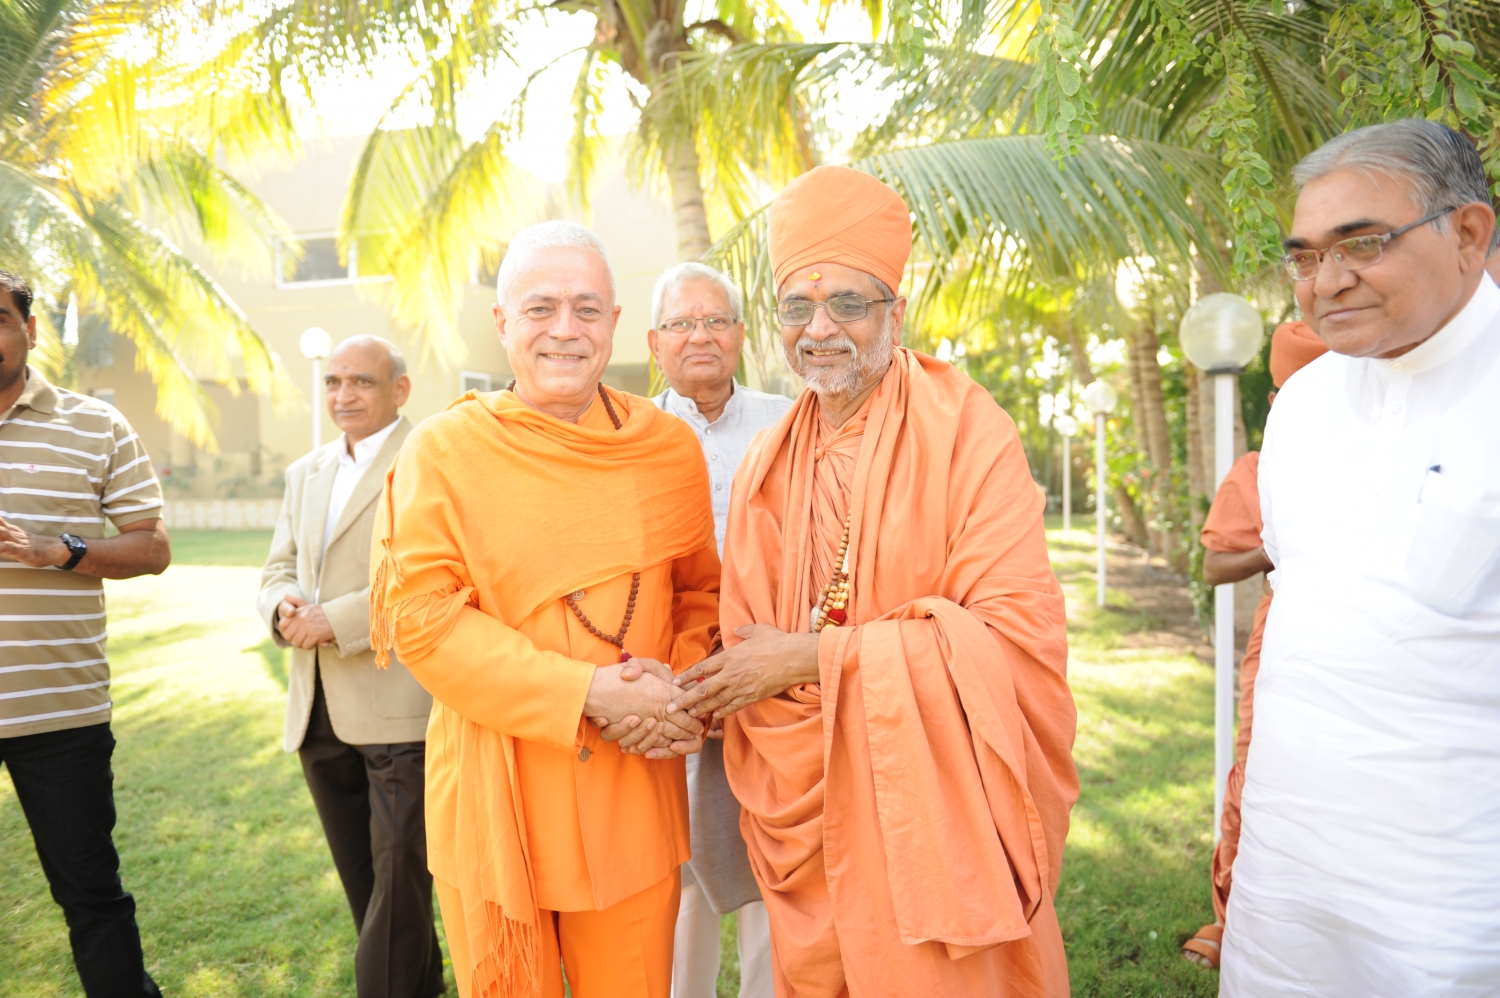 H.H. Jagat Guru Amrta Sūryānanda Mahā Rāja et H.H. Shastri Madhavapriyadas Jī, Président du Shrī Swami Narayan Gurukul Vishwavidya Pratishthanam